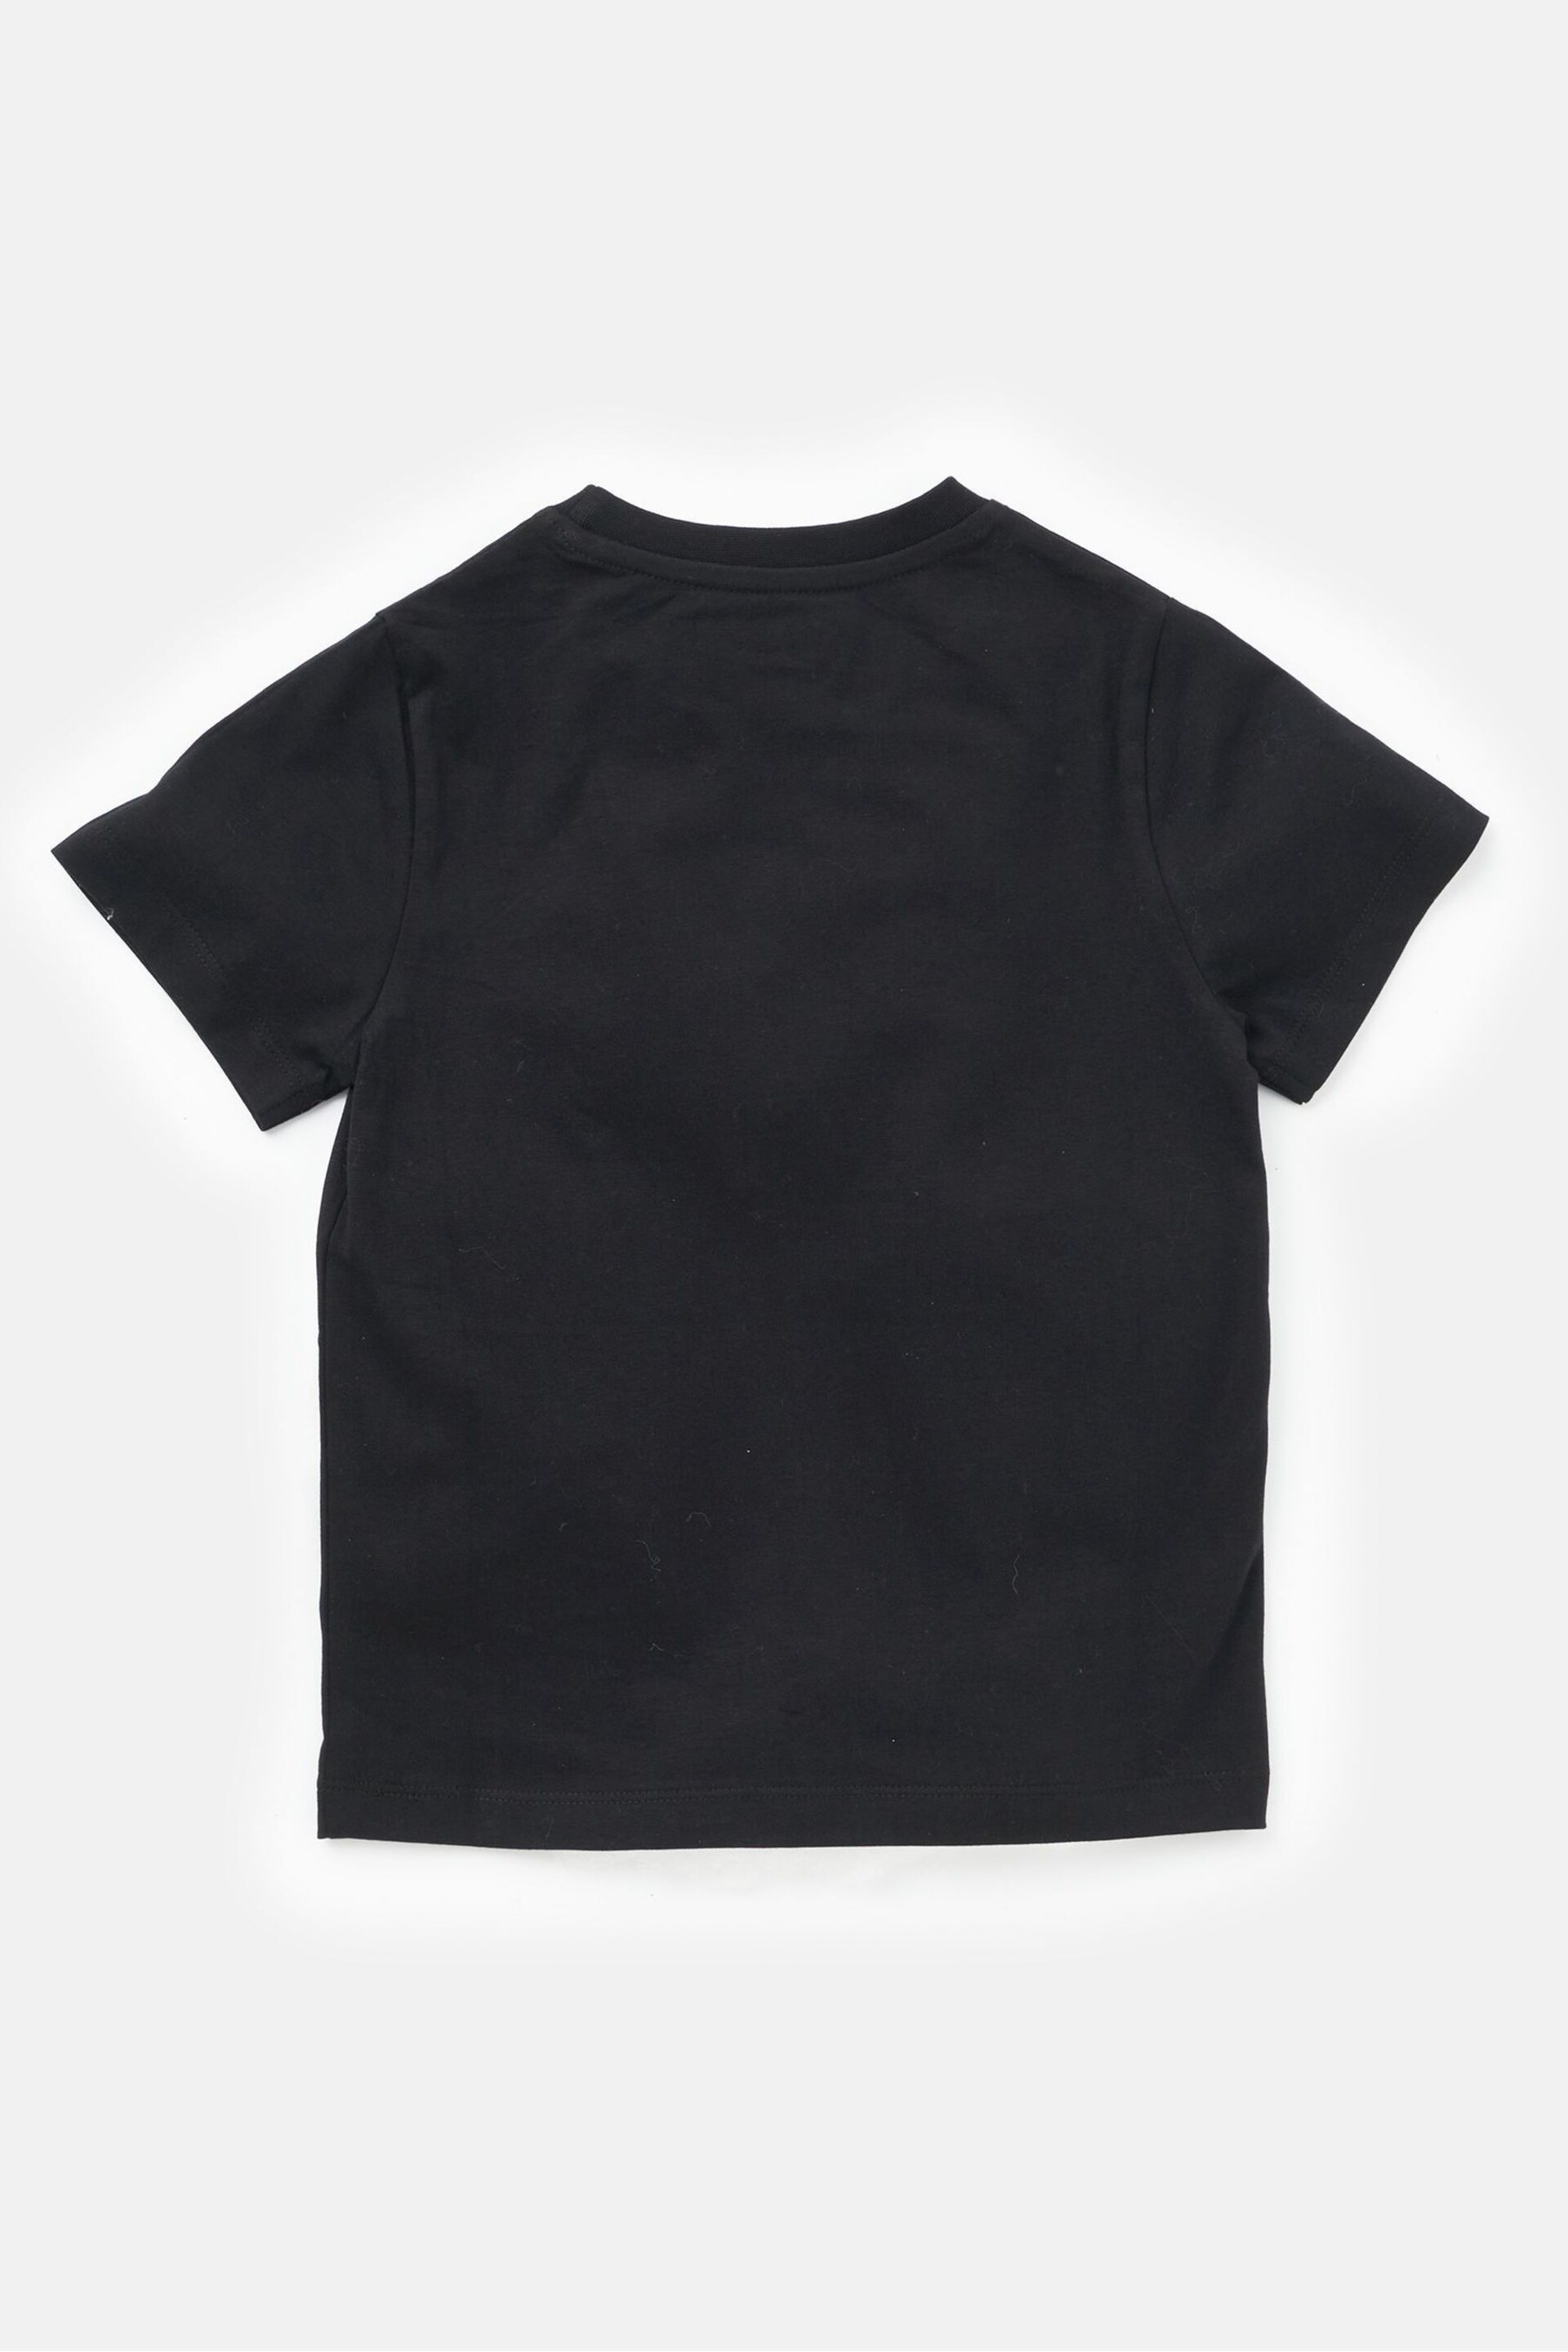 Angel & Rocket Black Sonic Short Sleeve T-Shirt - Image 4 of 5